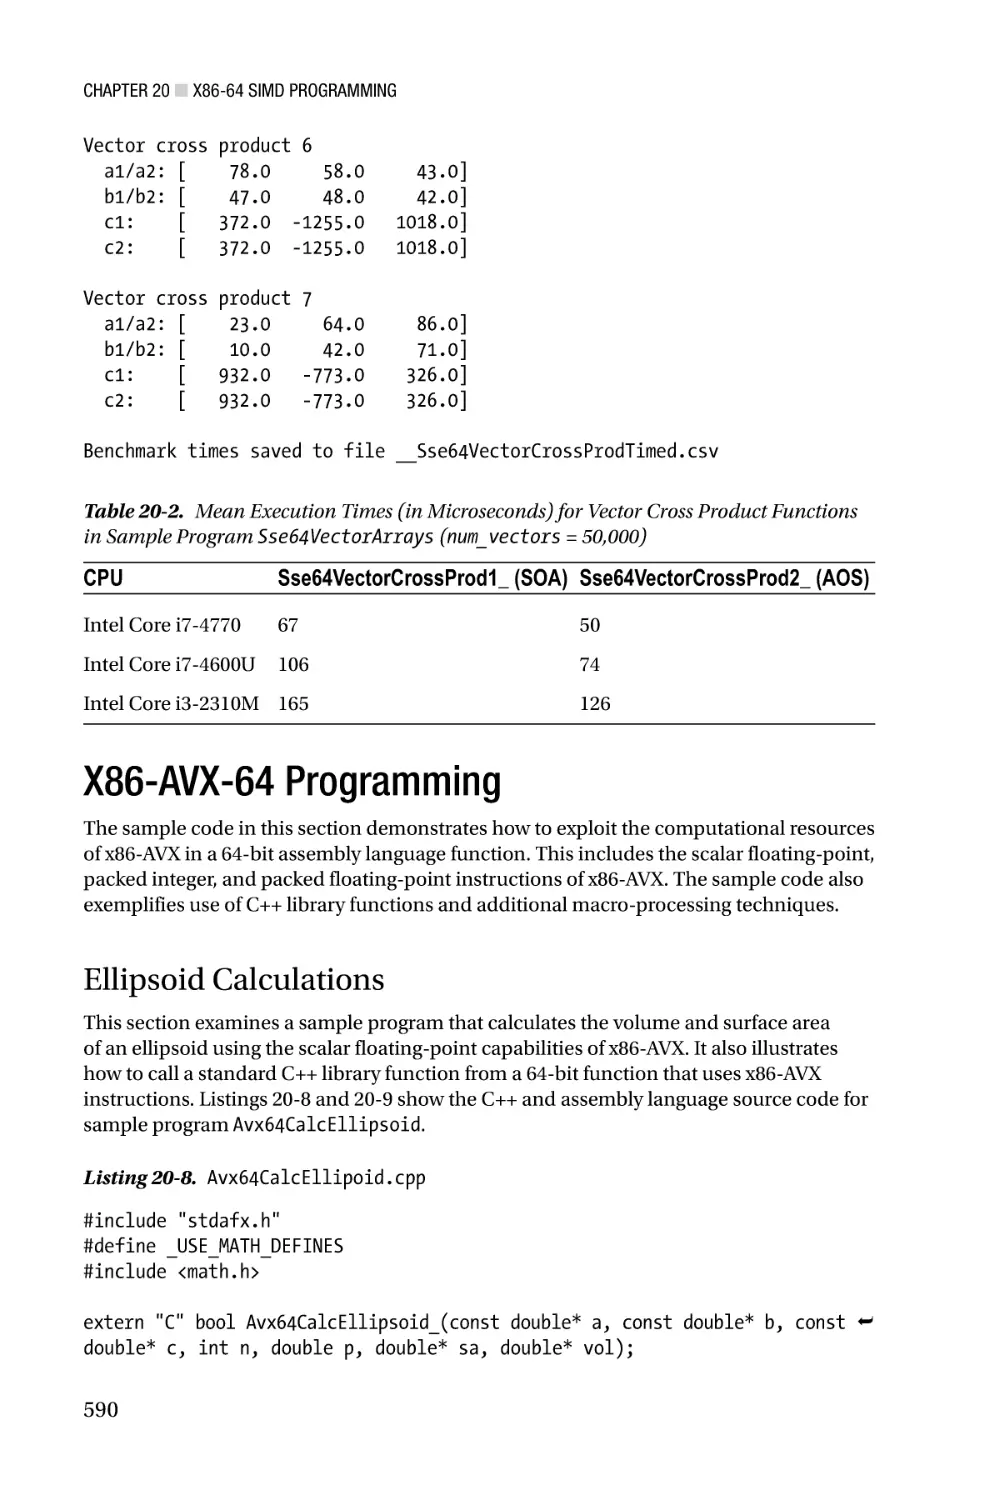 X86-AVX-64 Programming
Ellipsoid Calculations